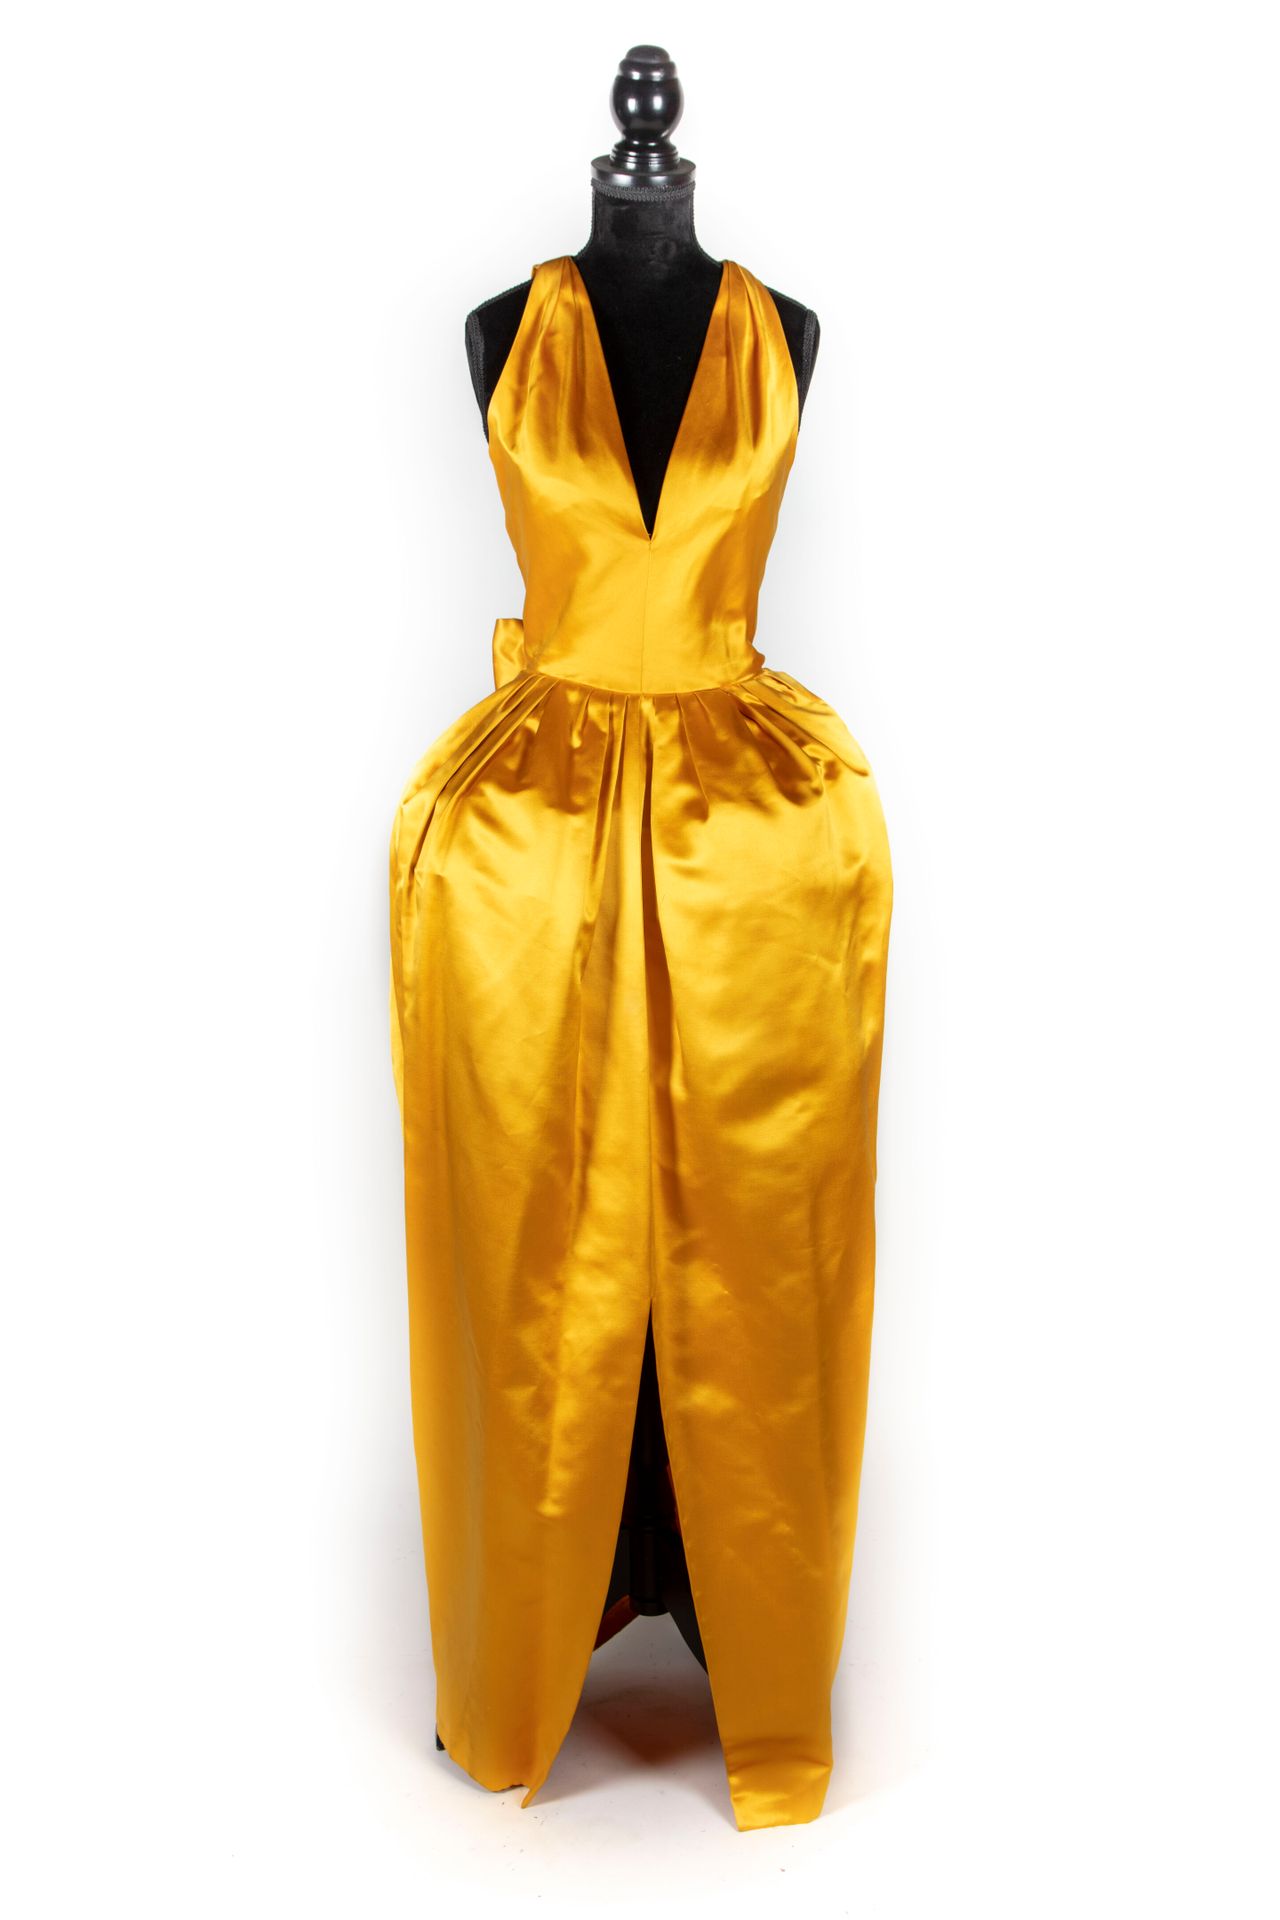 DIOR Christian DIOR - Paris

Haute Couture Collection - Fall-Winter 1979

Evenin&hellip;